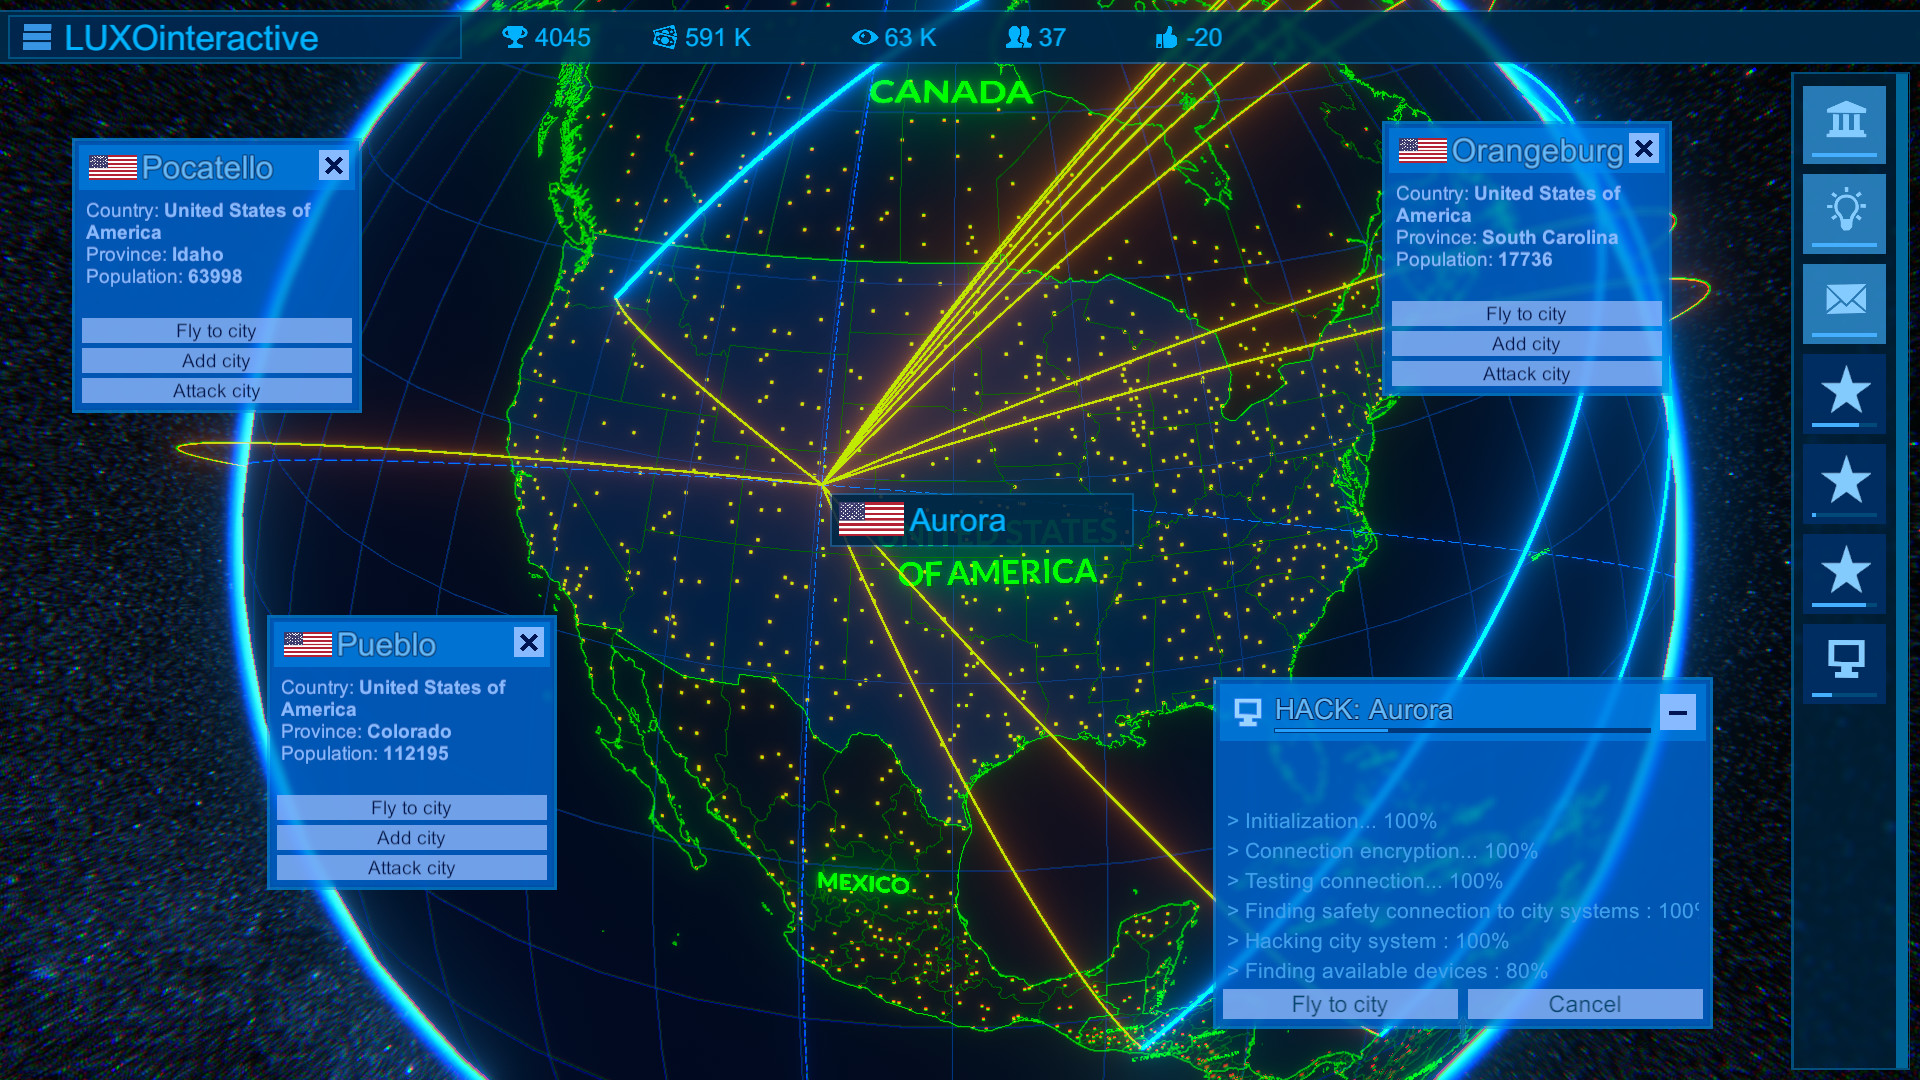 Hacking Simulator'' network attacks game.